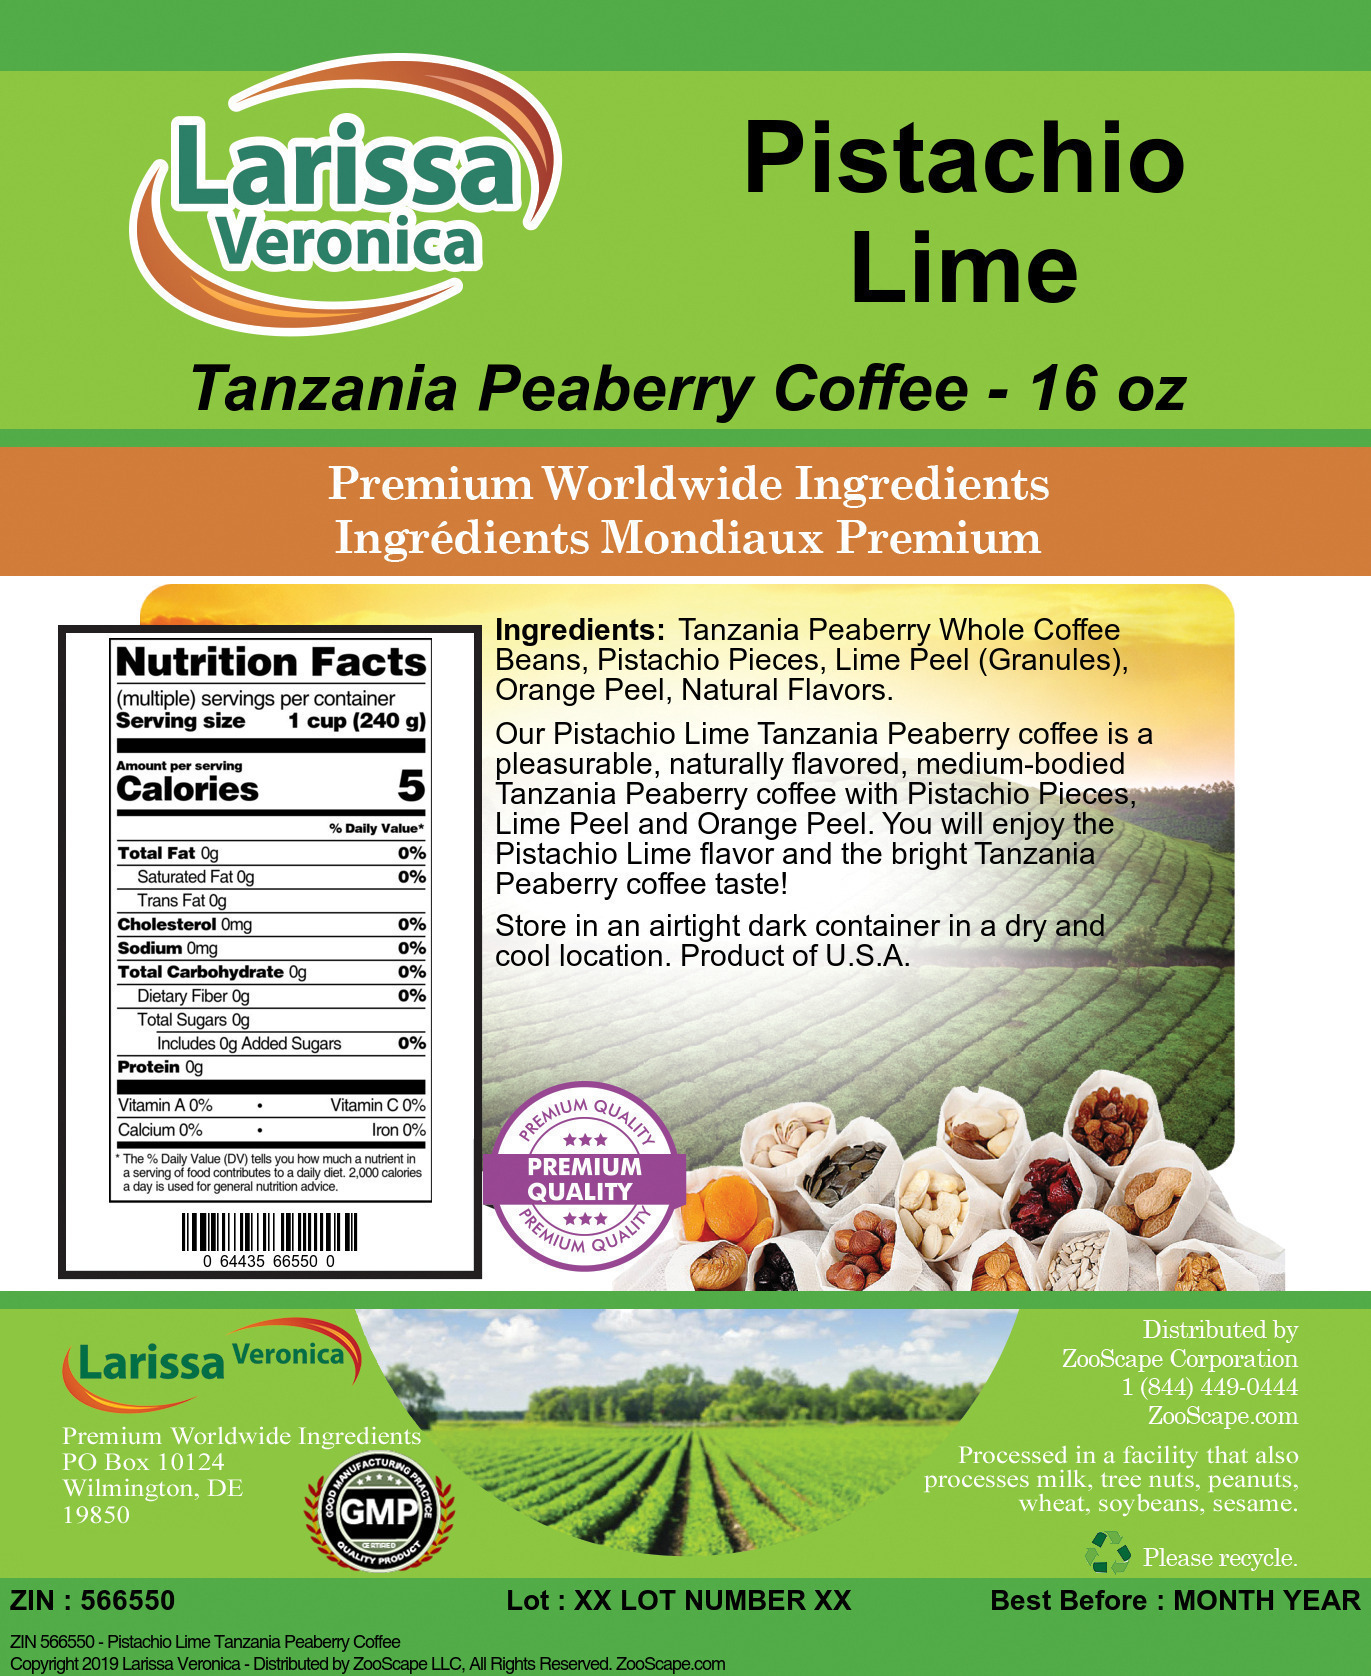 Pistachio Lime Tanzania Peaberry Coffee - Label